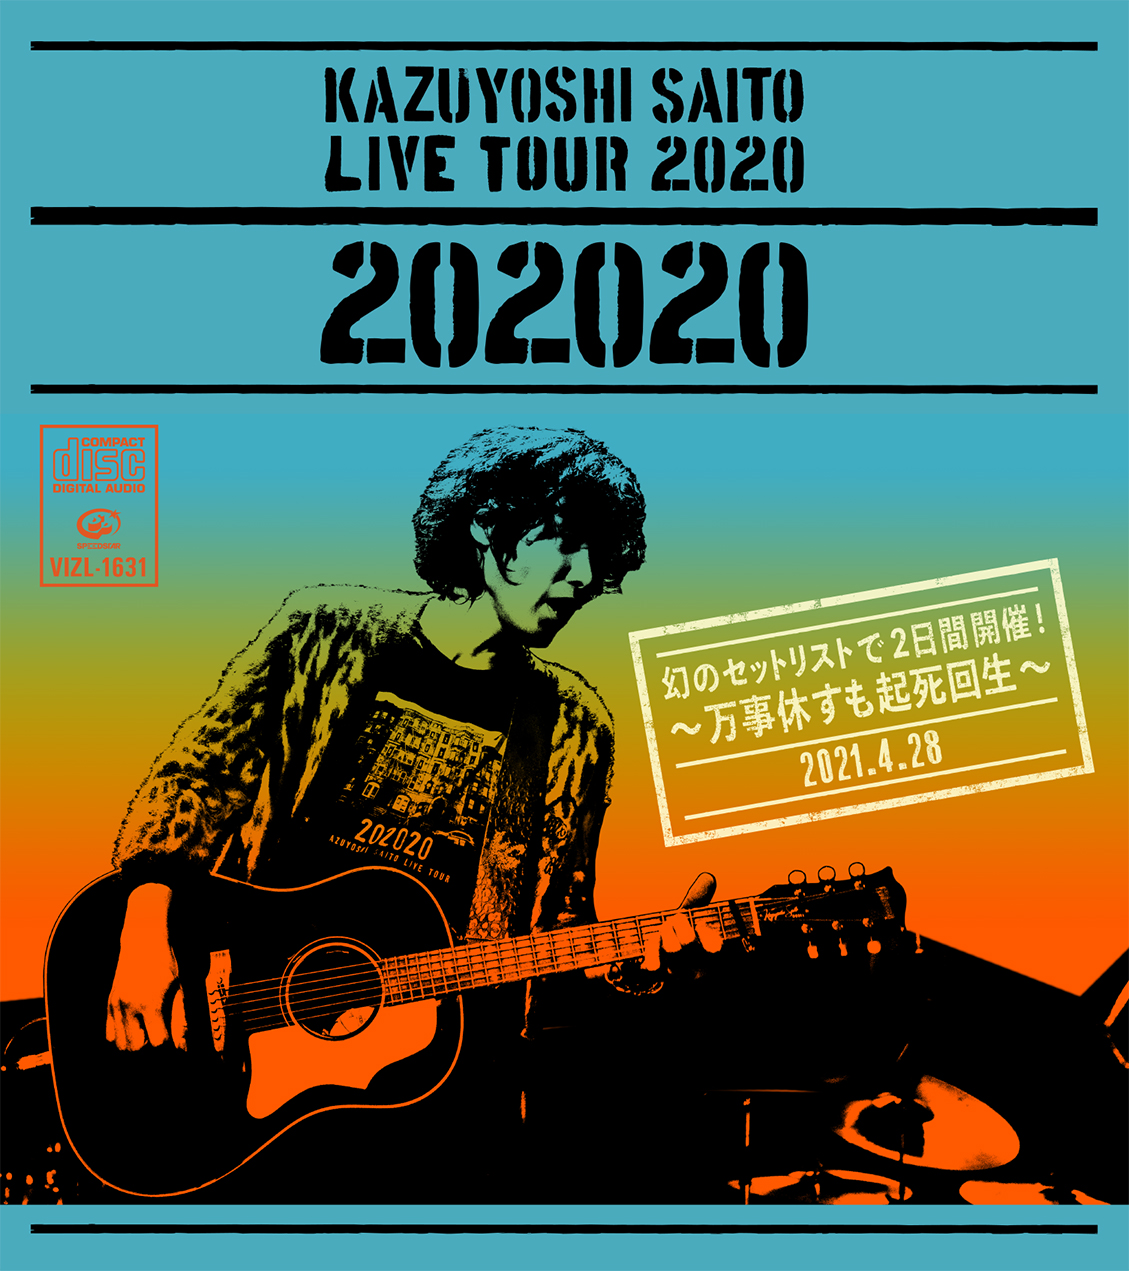 『KAZUYOSHI SAITO LIVE TOUR 2020 “202020” 幻のセットリストで2日間開催！ ～ 万事休すも起死回生 ～』jacket